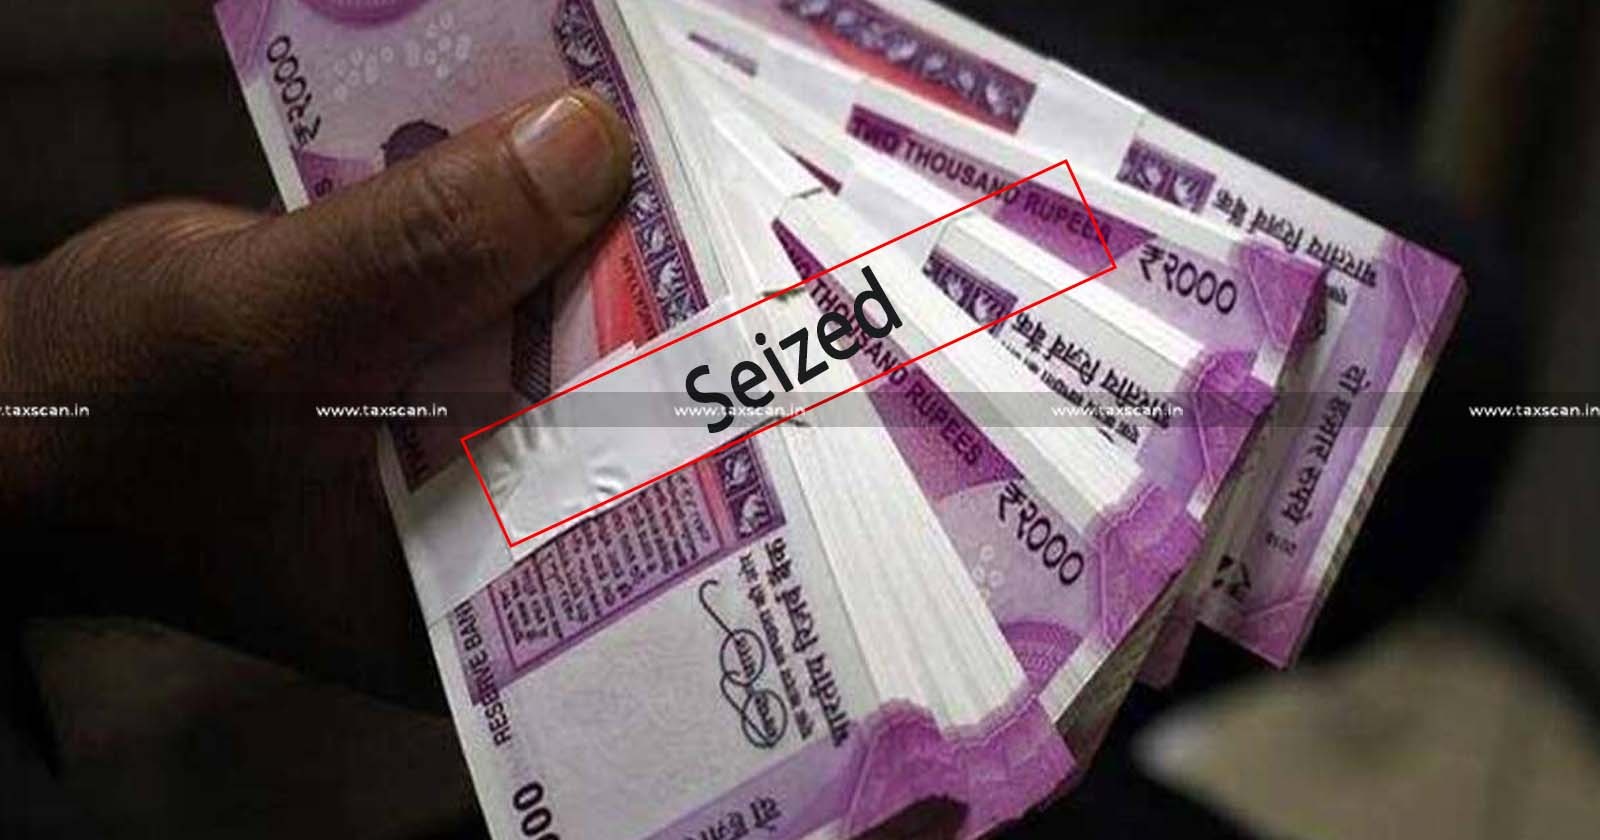 Cash Source Seized - ITAT - ITAT delhi - CBI - Corporate Office - Income Tax - Section 69 of the Income Tax Act - Central Bureau of Investigation - taxscan